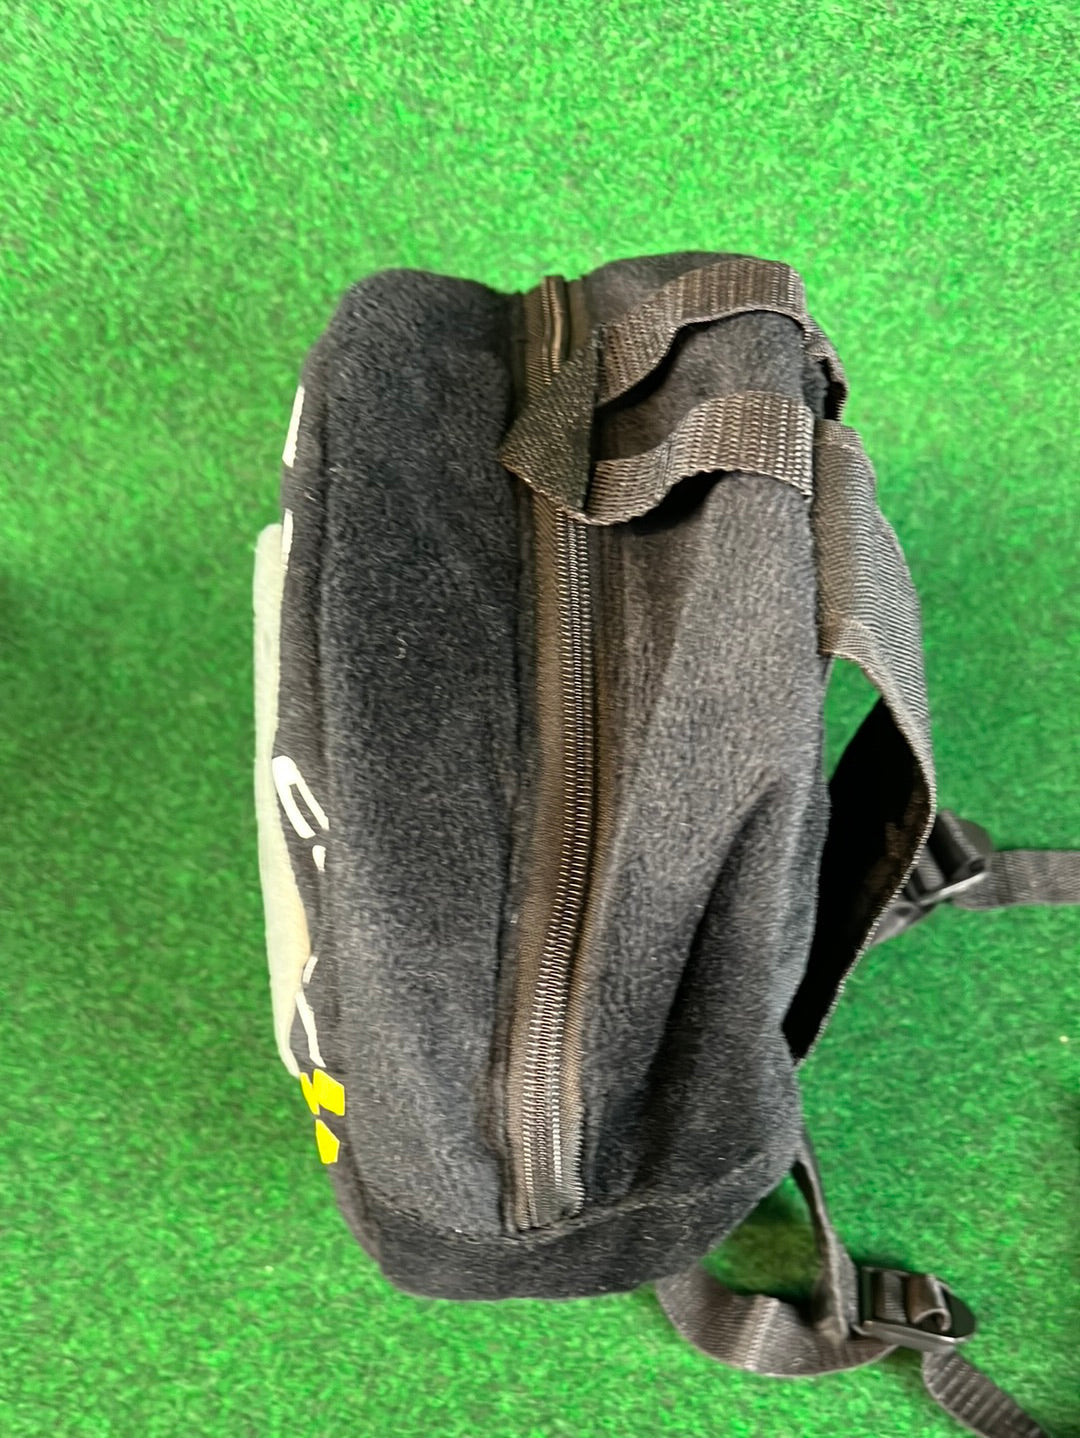 Suzuka Circuit - Fleece Kids Small Backpack Carry Case